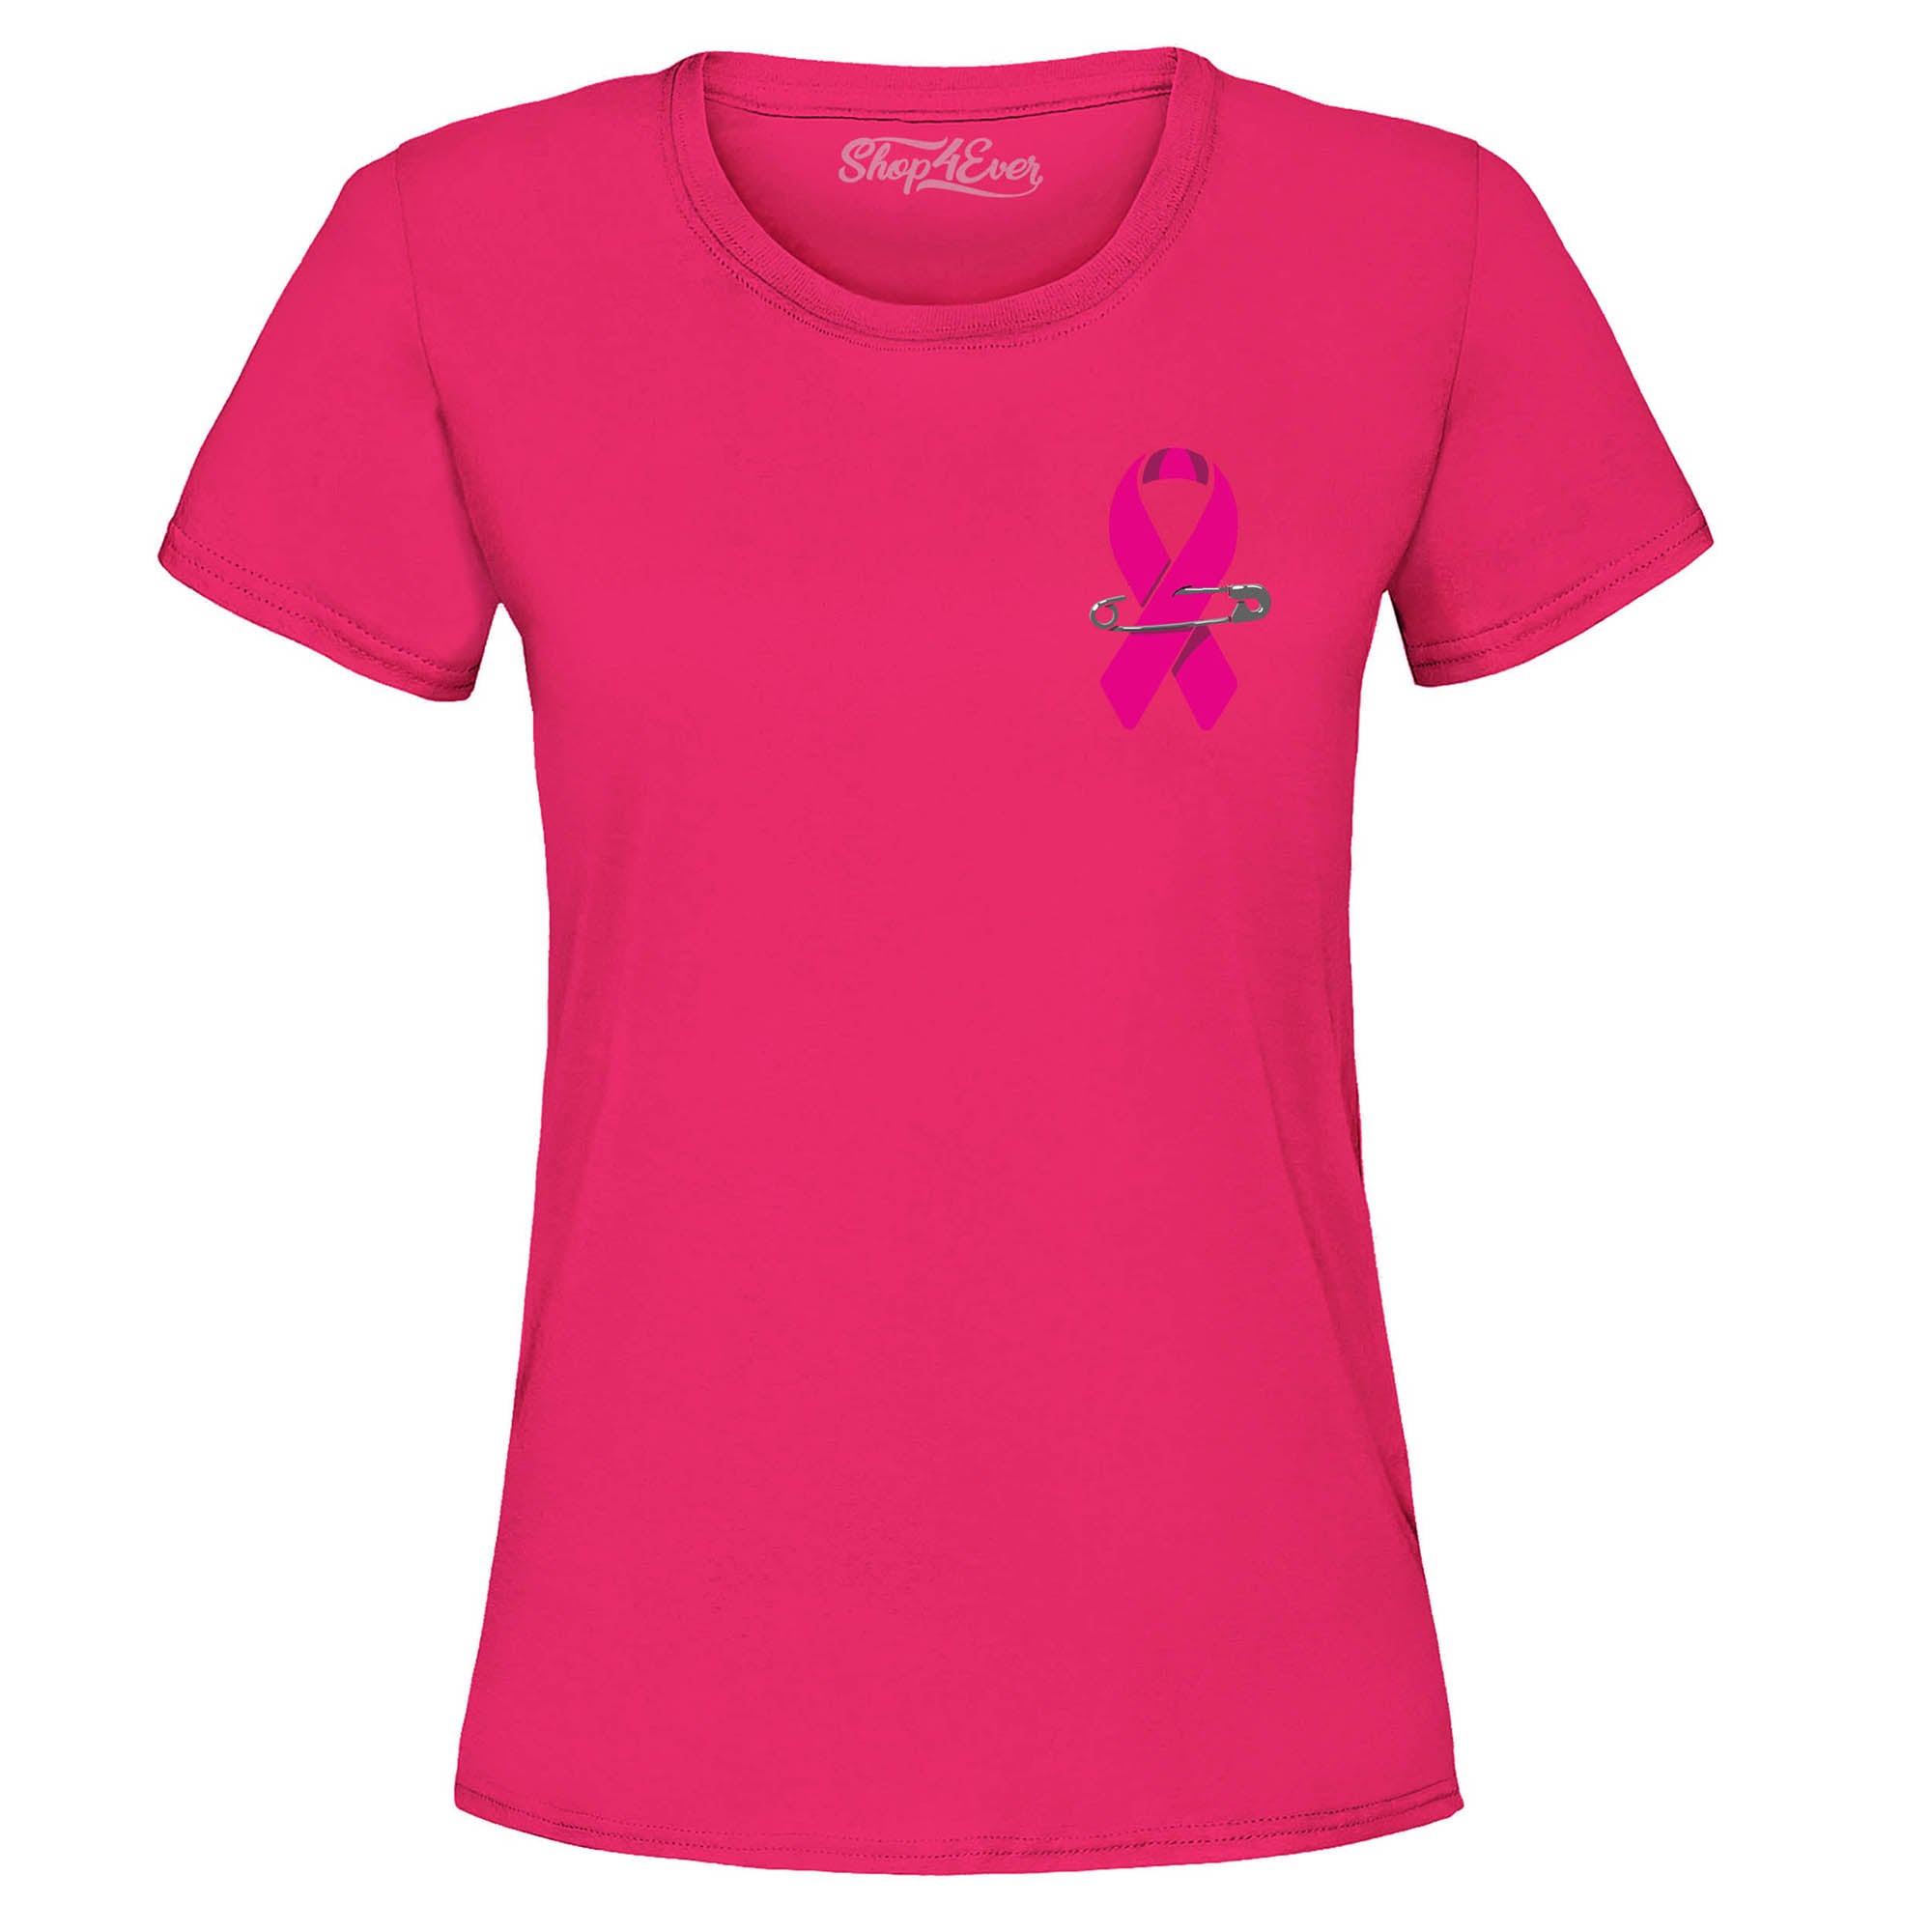 Pink Ribbon Pin Breast Cancer Awareness Women's T-Shirt Survivor Tee